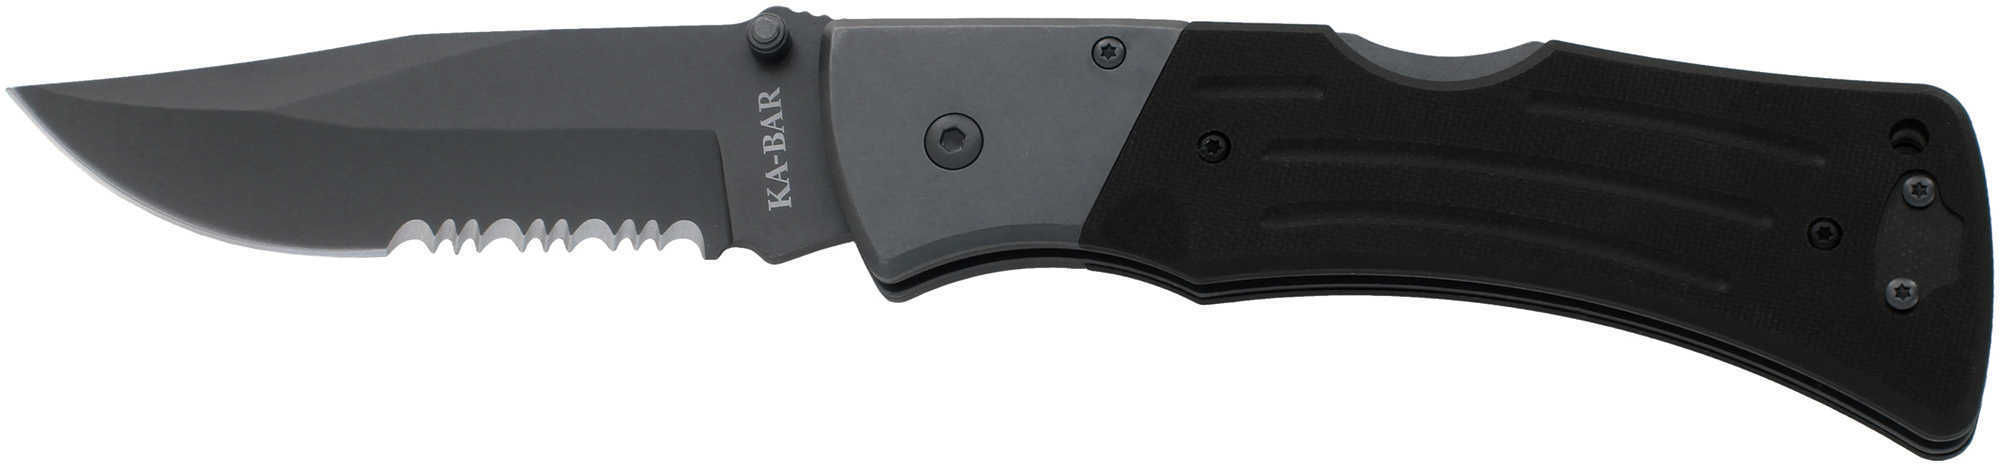 Ka-Bar G10 Mule Folder Clip Blade 4" Serrated Edge Knife Md: 2-3063-9